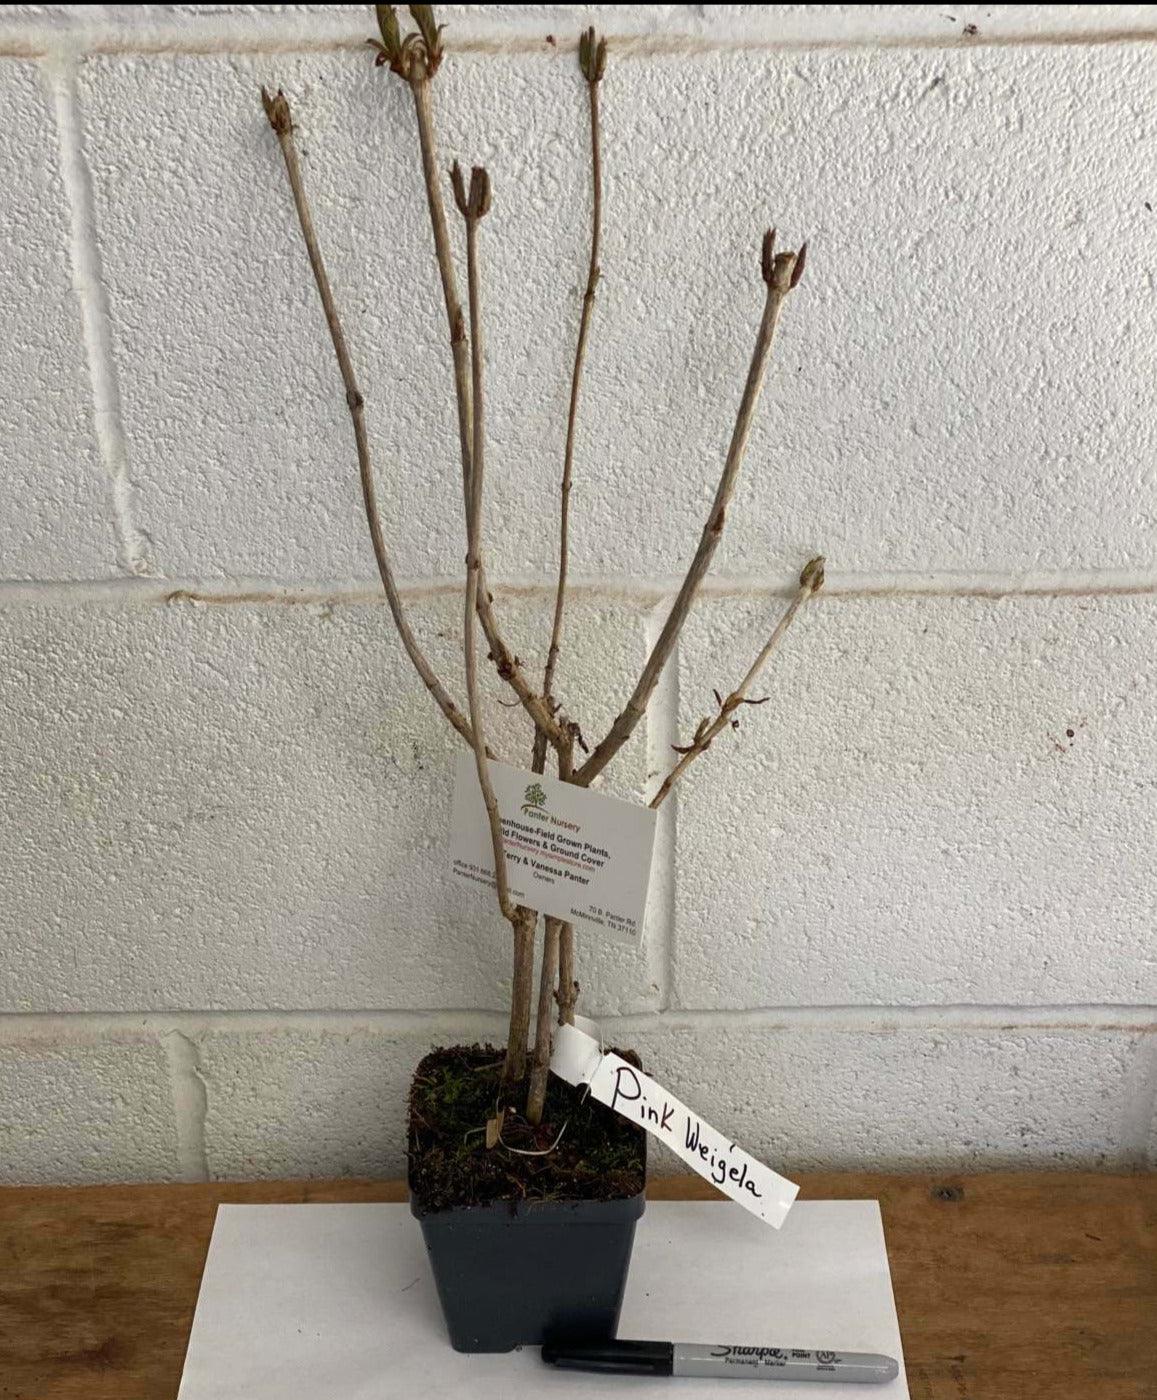 Pink Weigela Shrub/Bush - 6-12" Tall Live Plant - Seedling in 4" Pot - The Nursery Center